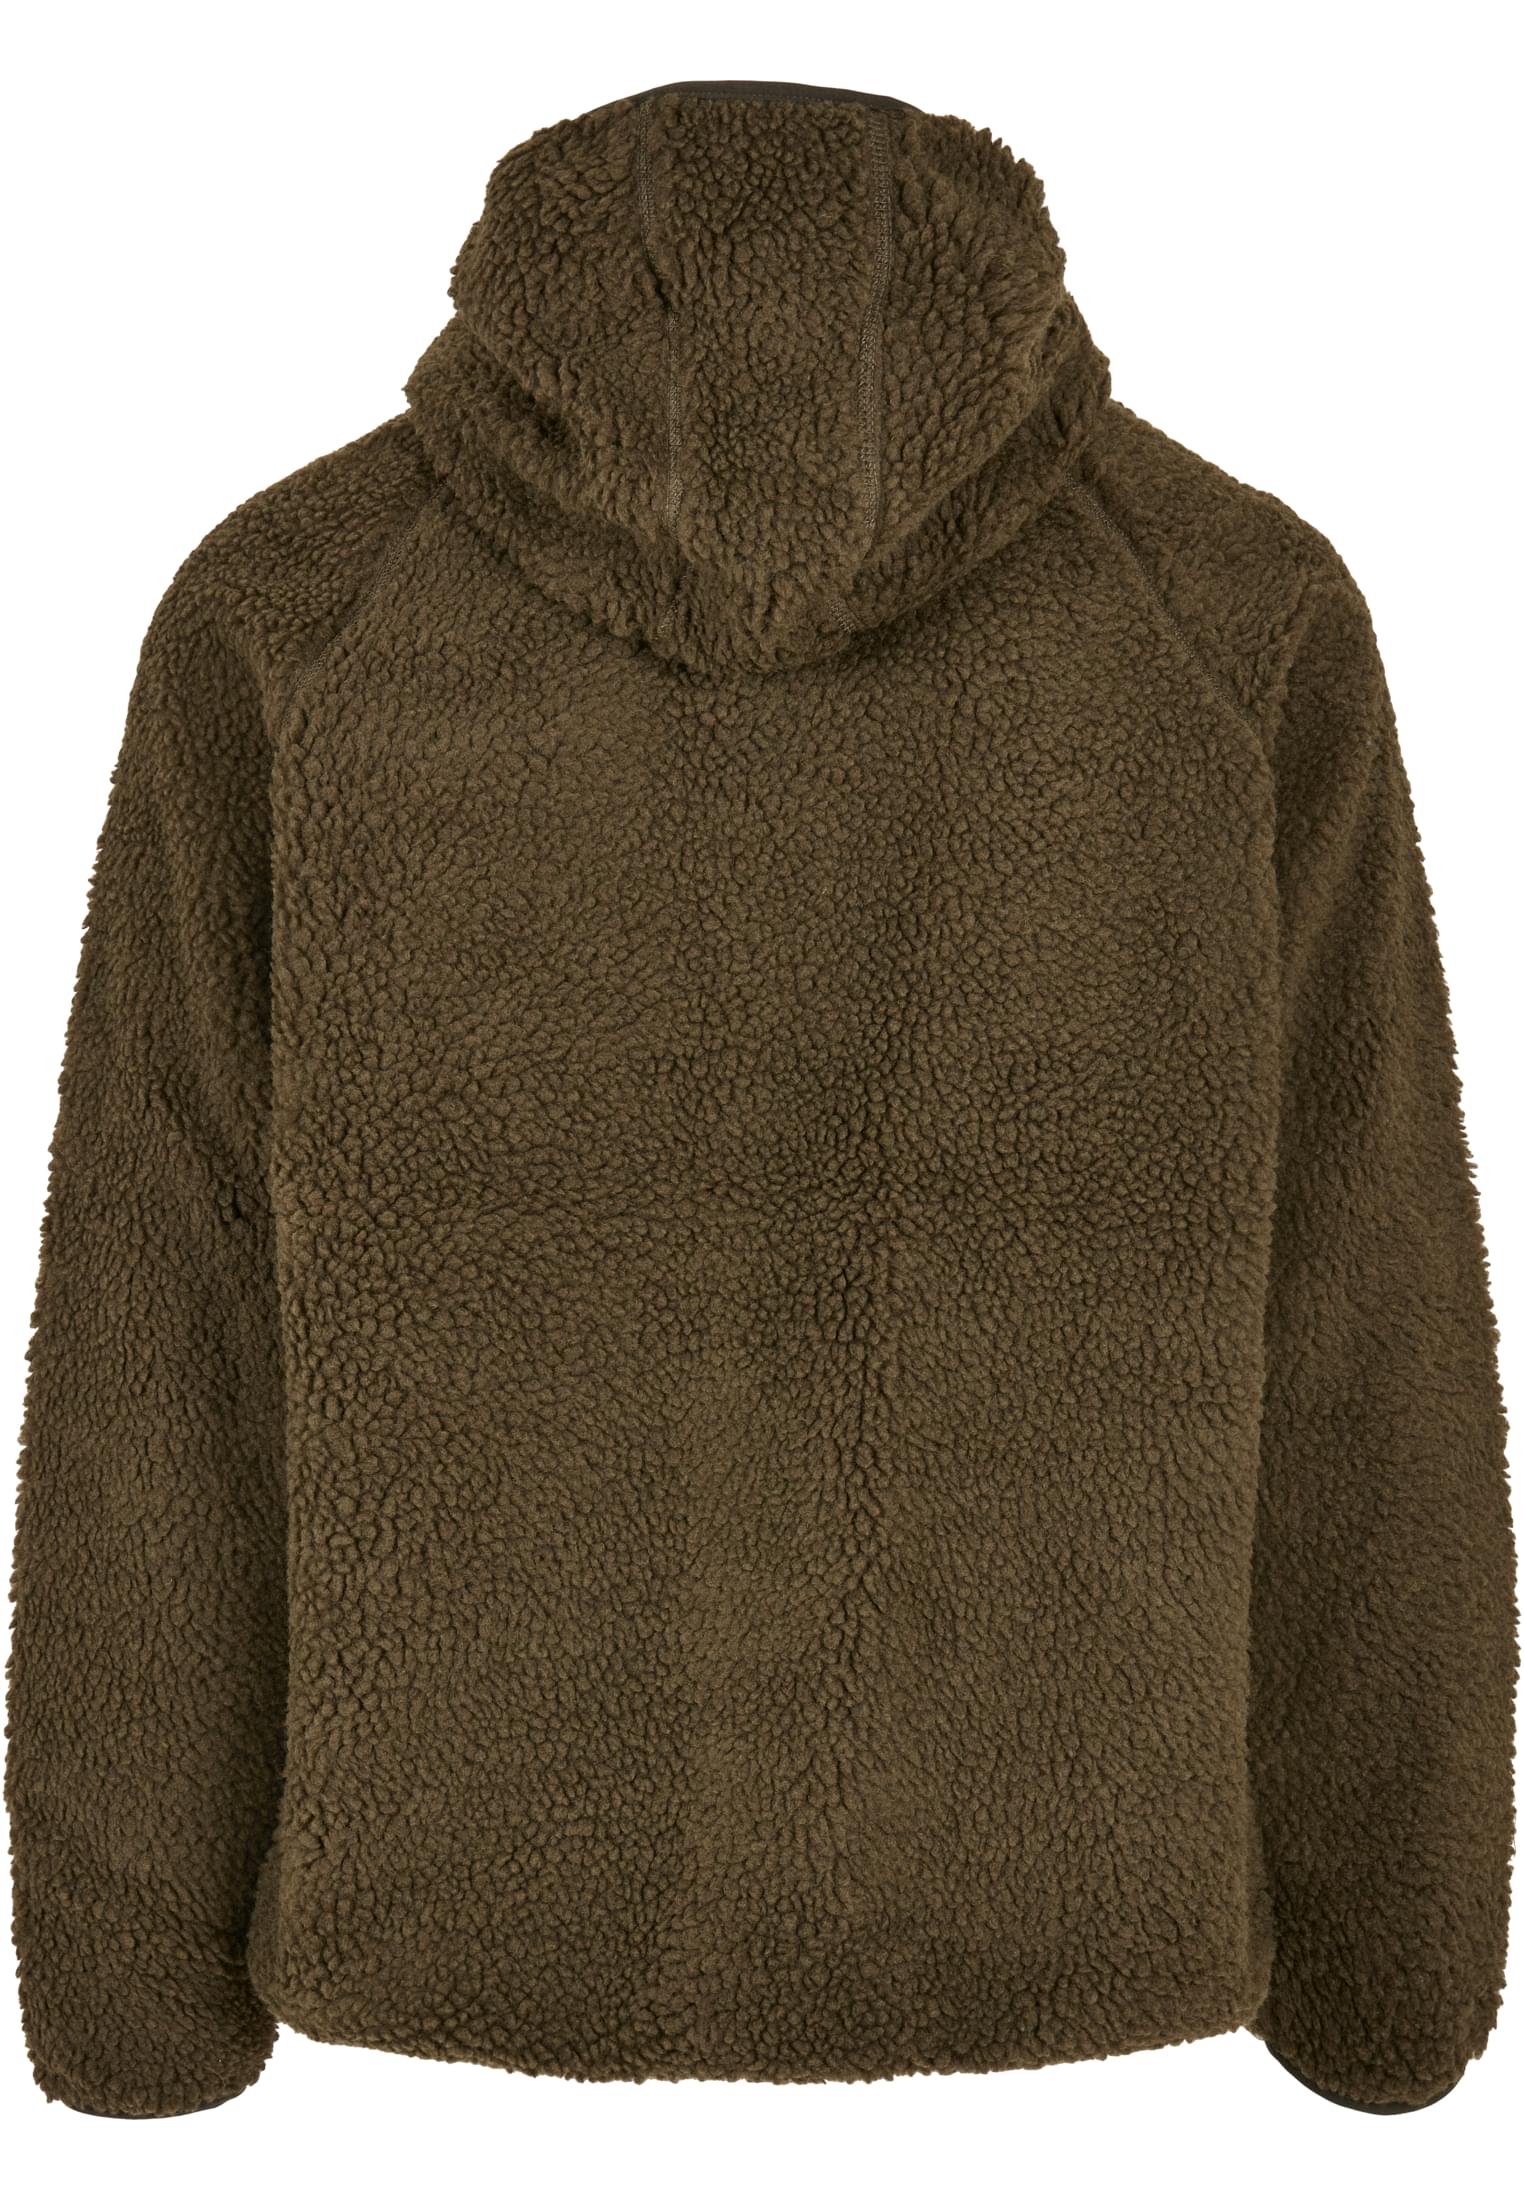 Pullover Teddyfleece Worker Jacket in Farbe olive